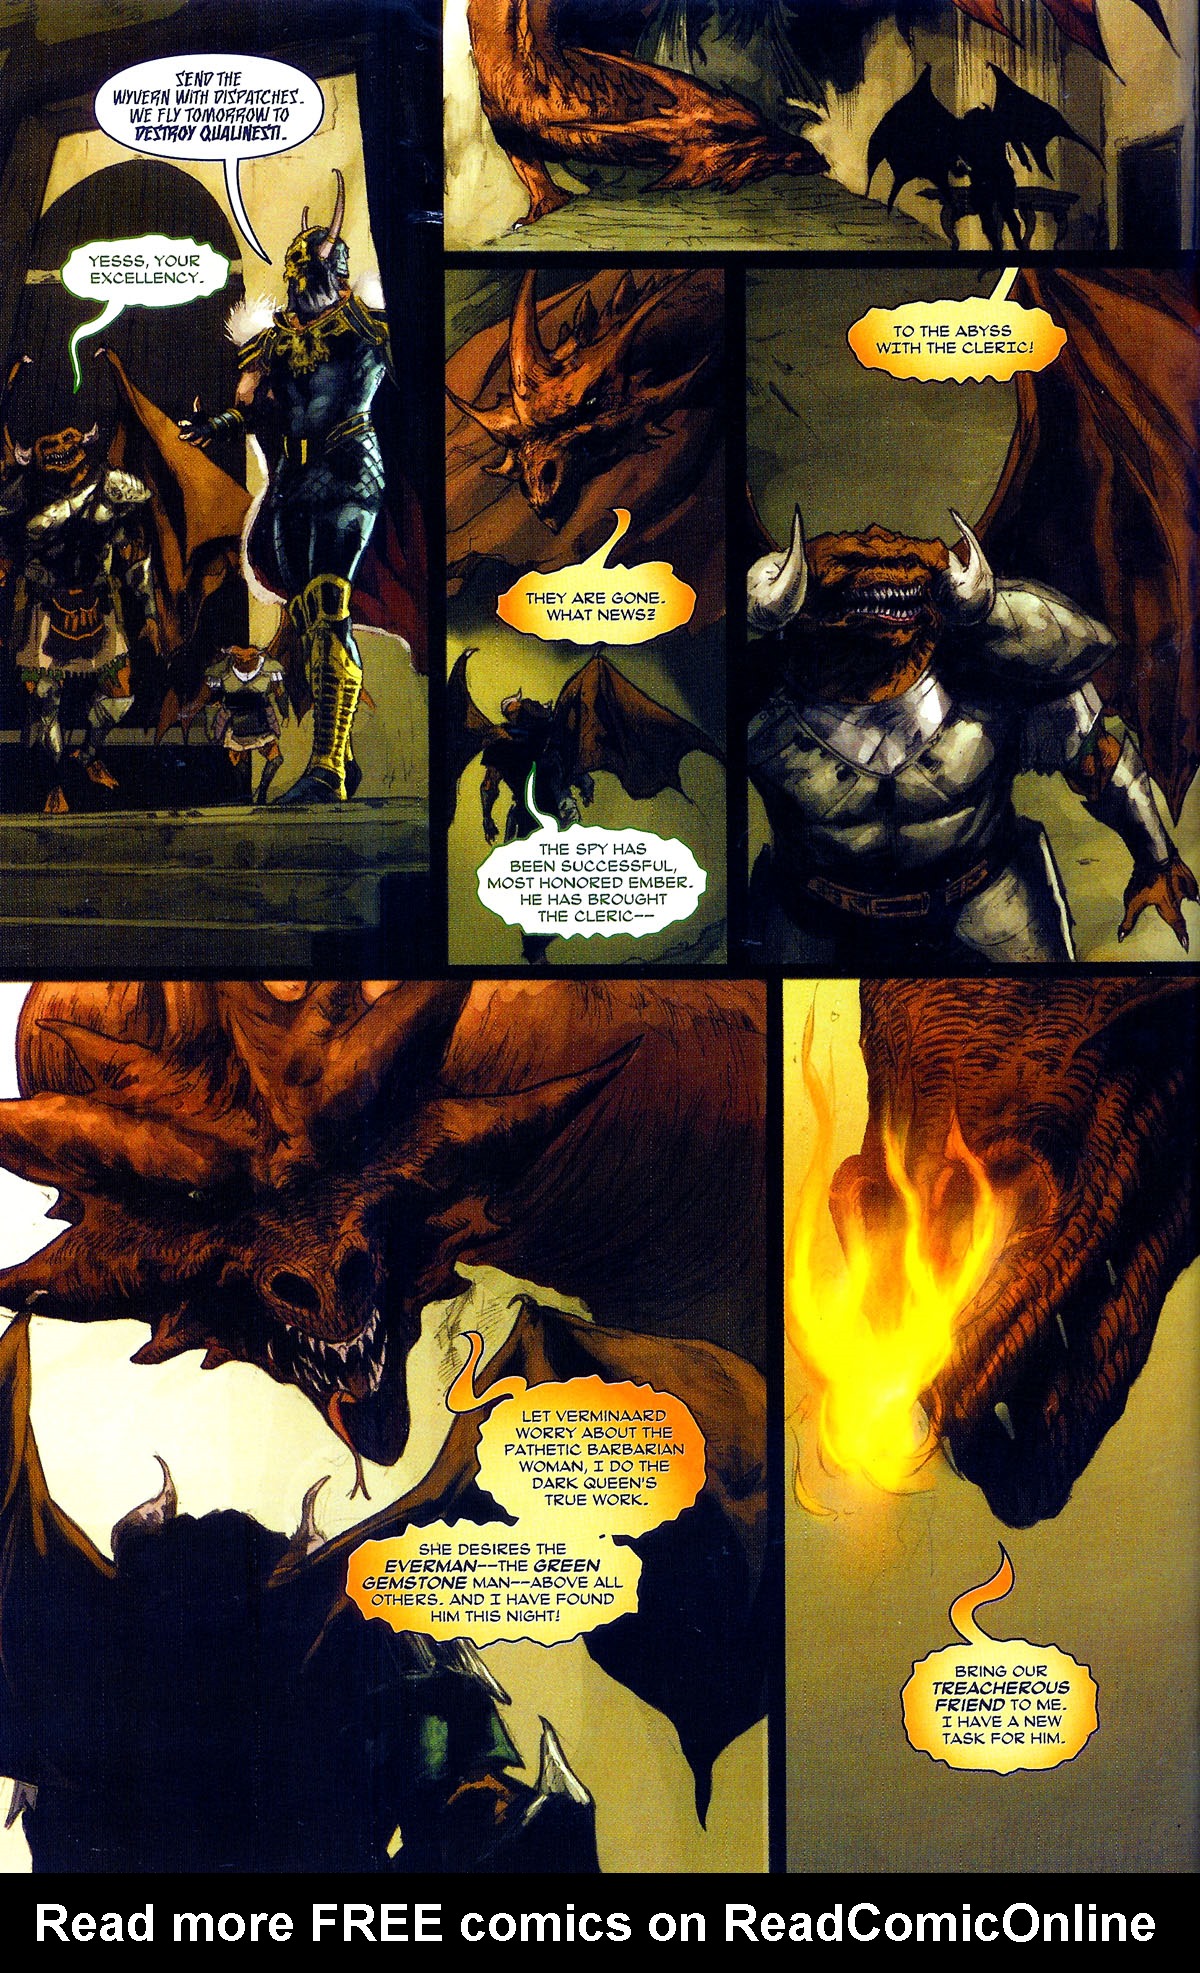 Комикс 7 читать. Dragonlance комиксы. Дракон комикс. Воин и дракон комикс.